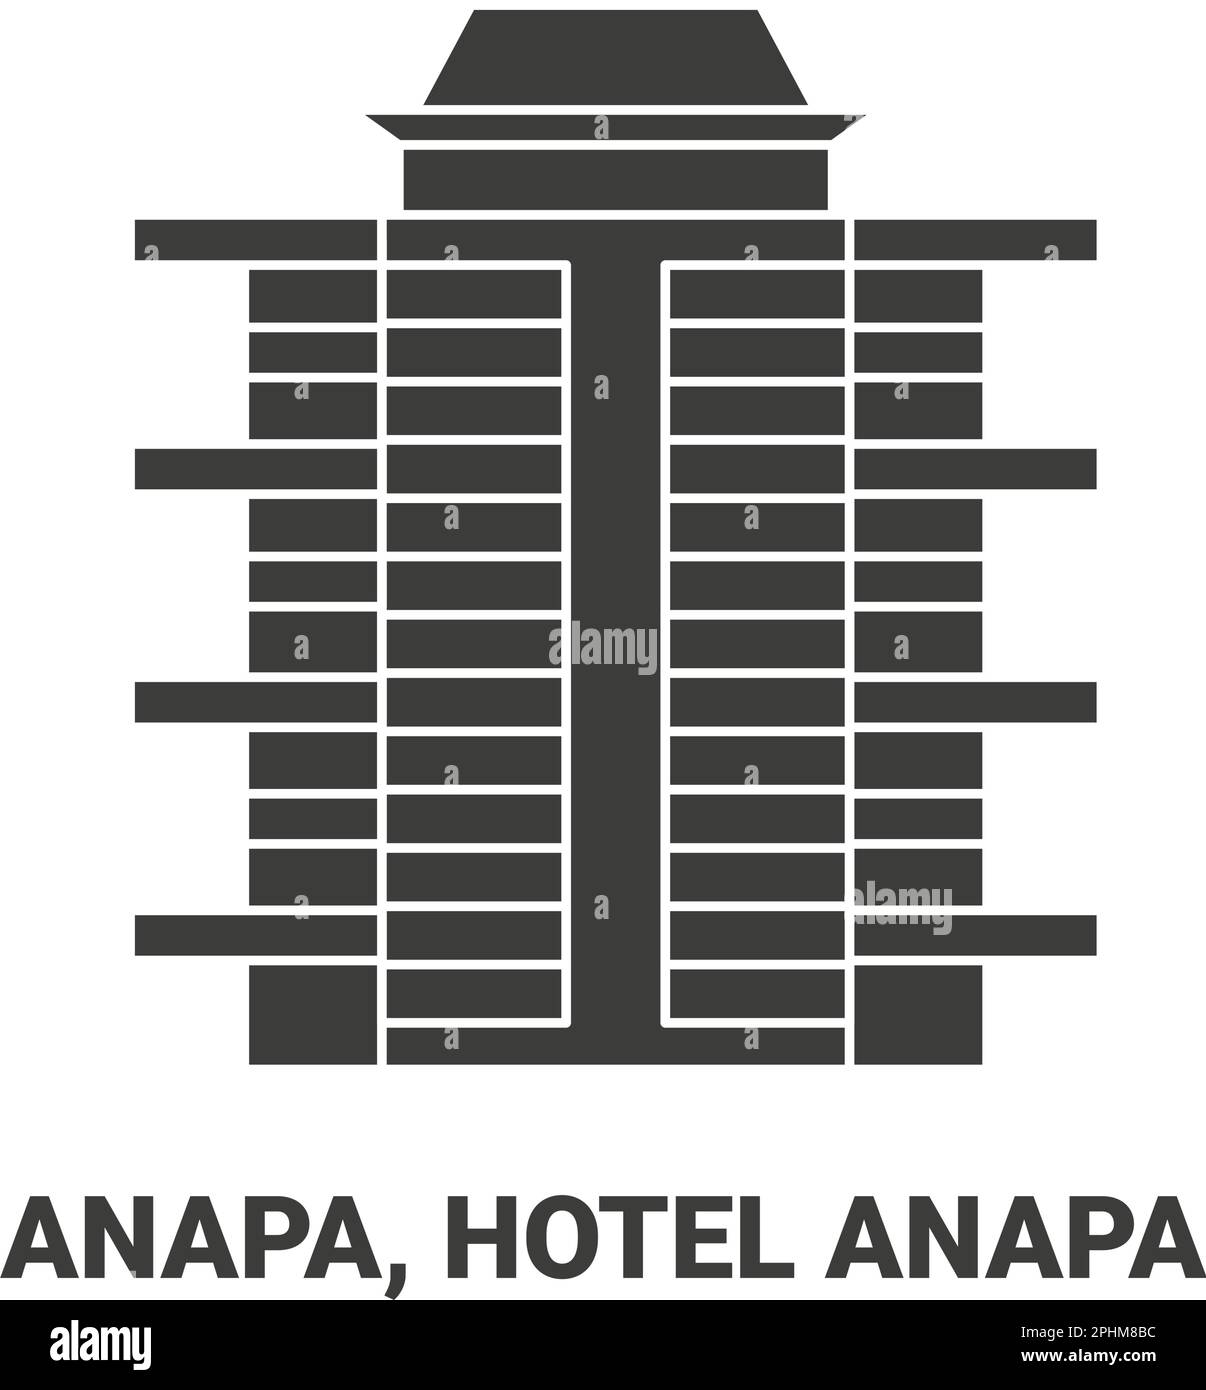 Russia, Anapa, Hotel Anapa travel landmark vector illustration Stock Vector